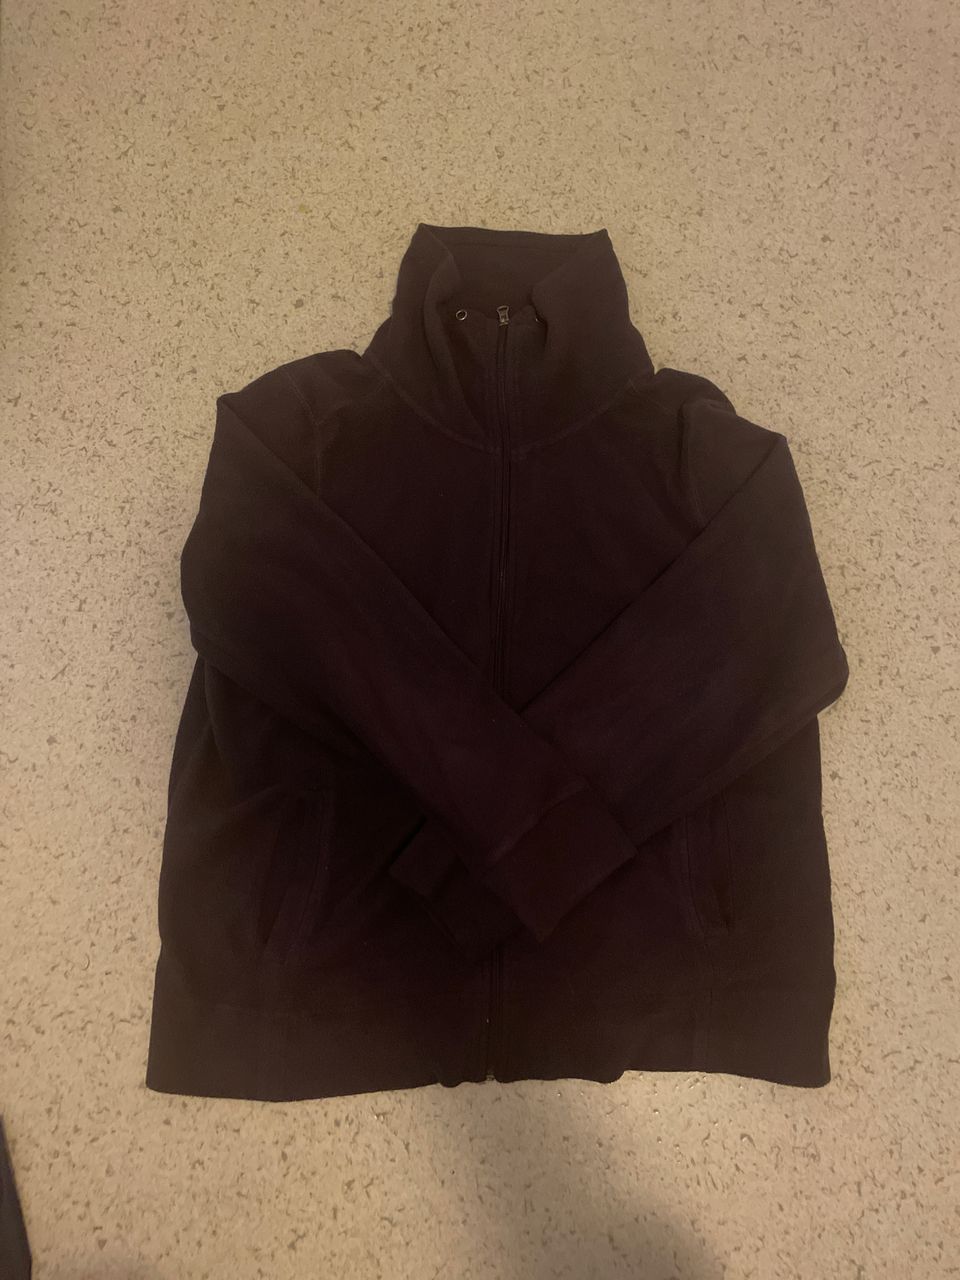 Dark purple zip up sweater